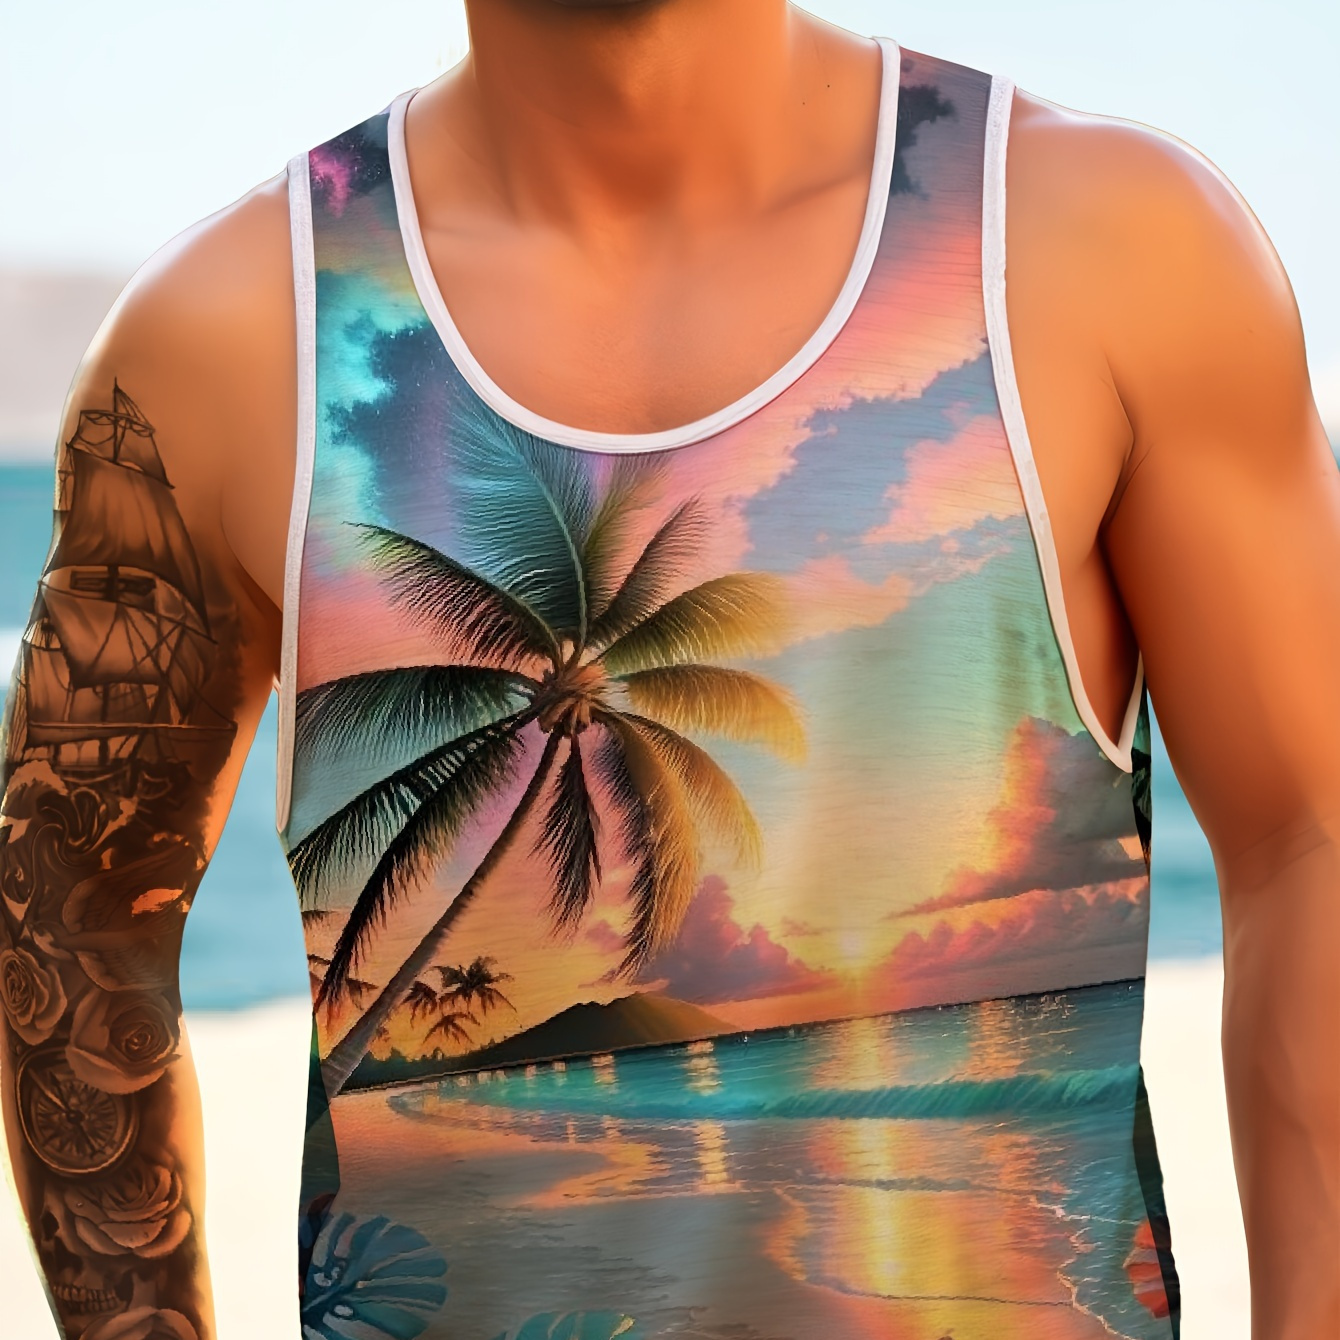 

Hawaiian Beach Vibe Print Tank Top, Men's Casual Comfy Top For Summer, Men's Sleeveless Shirt For Beach, Pool & Resort